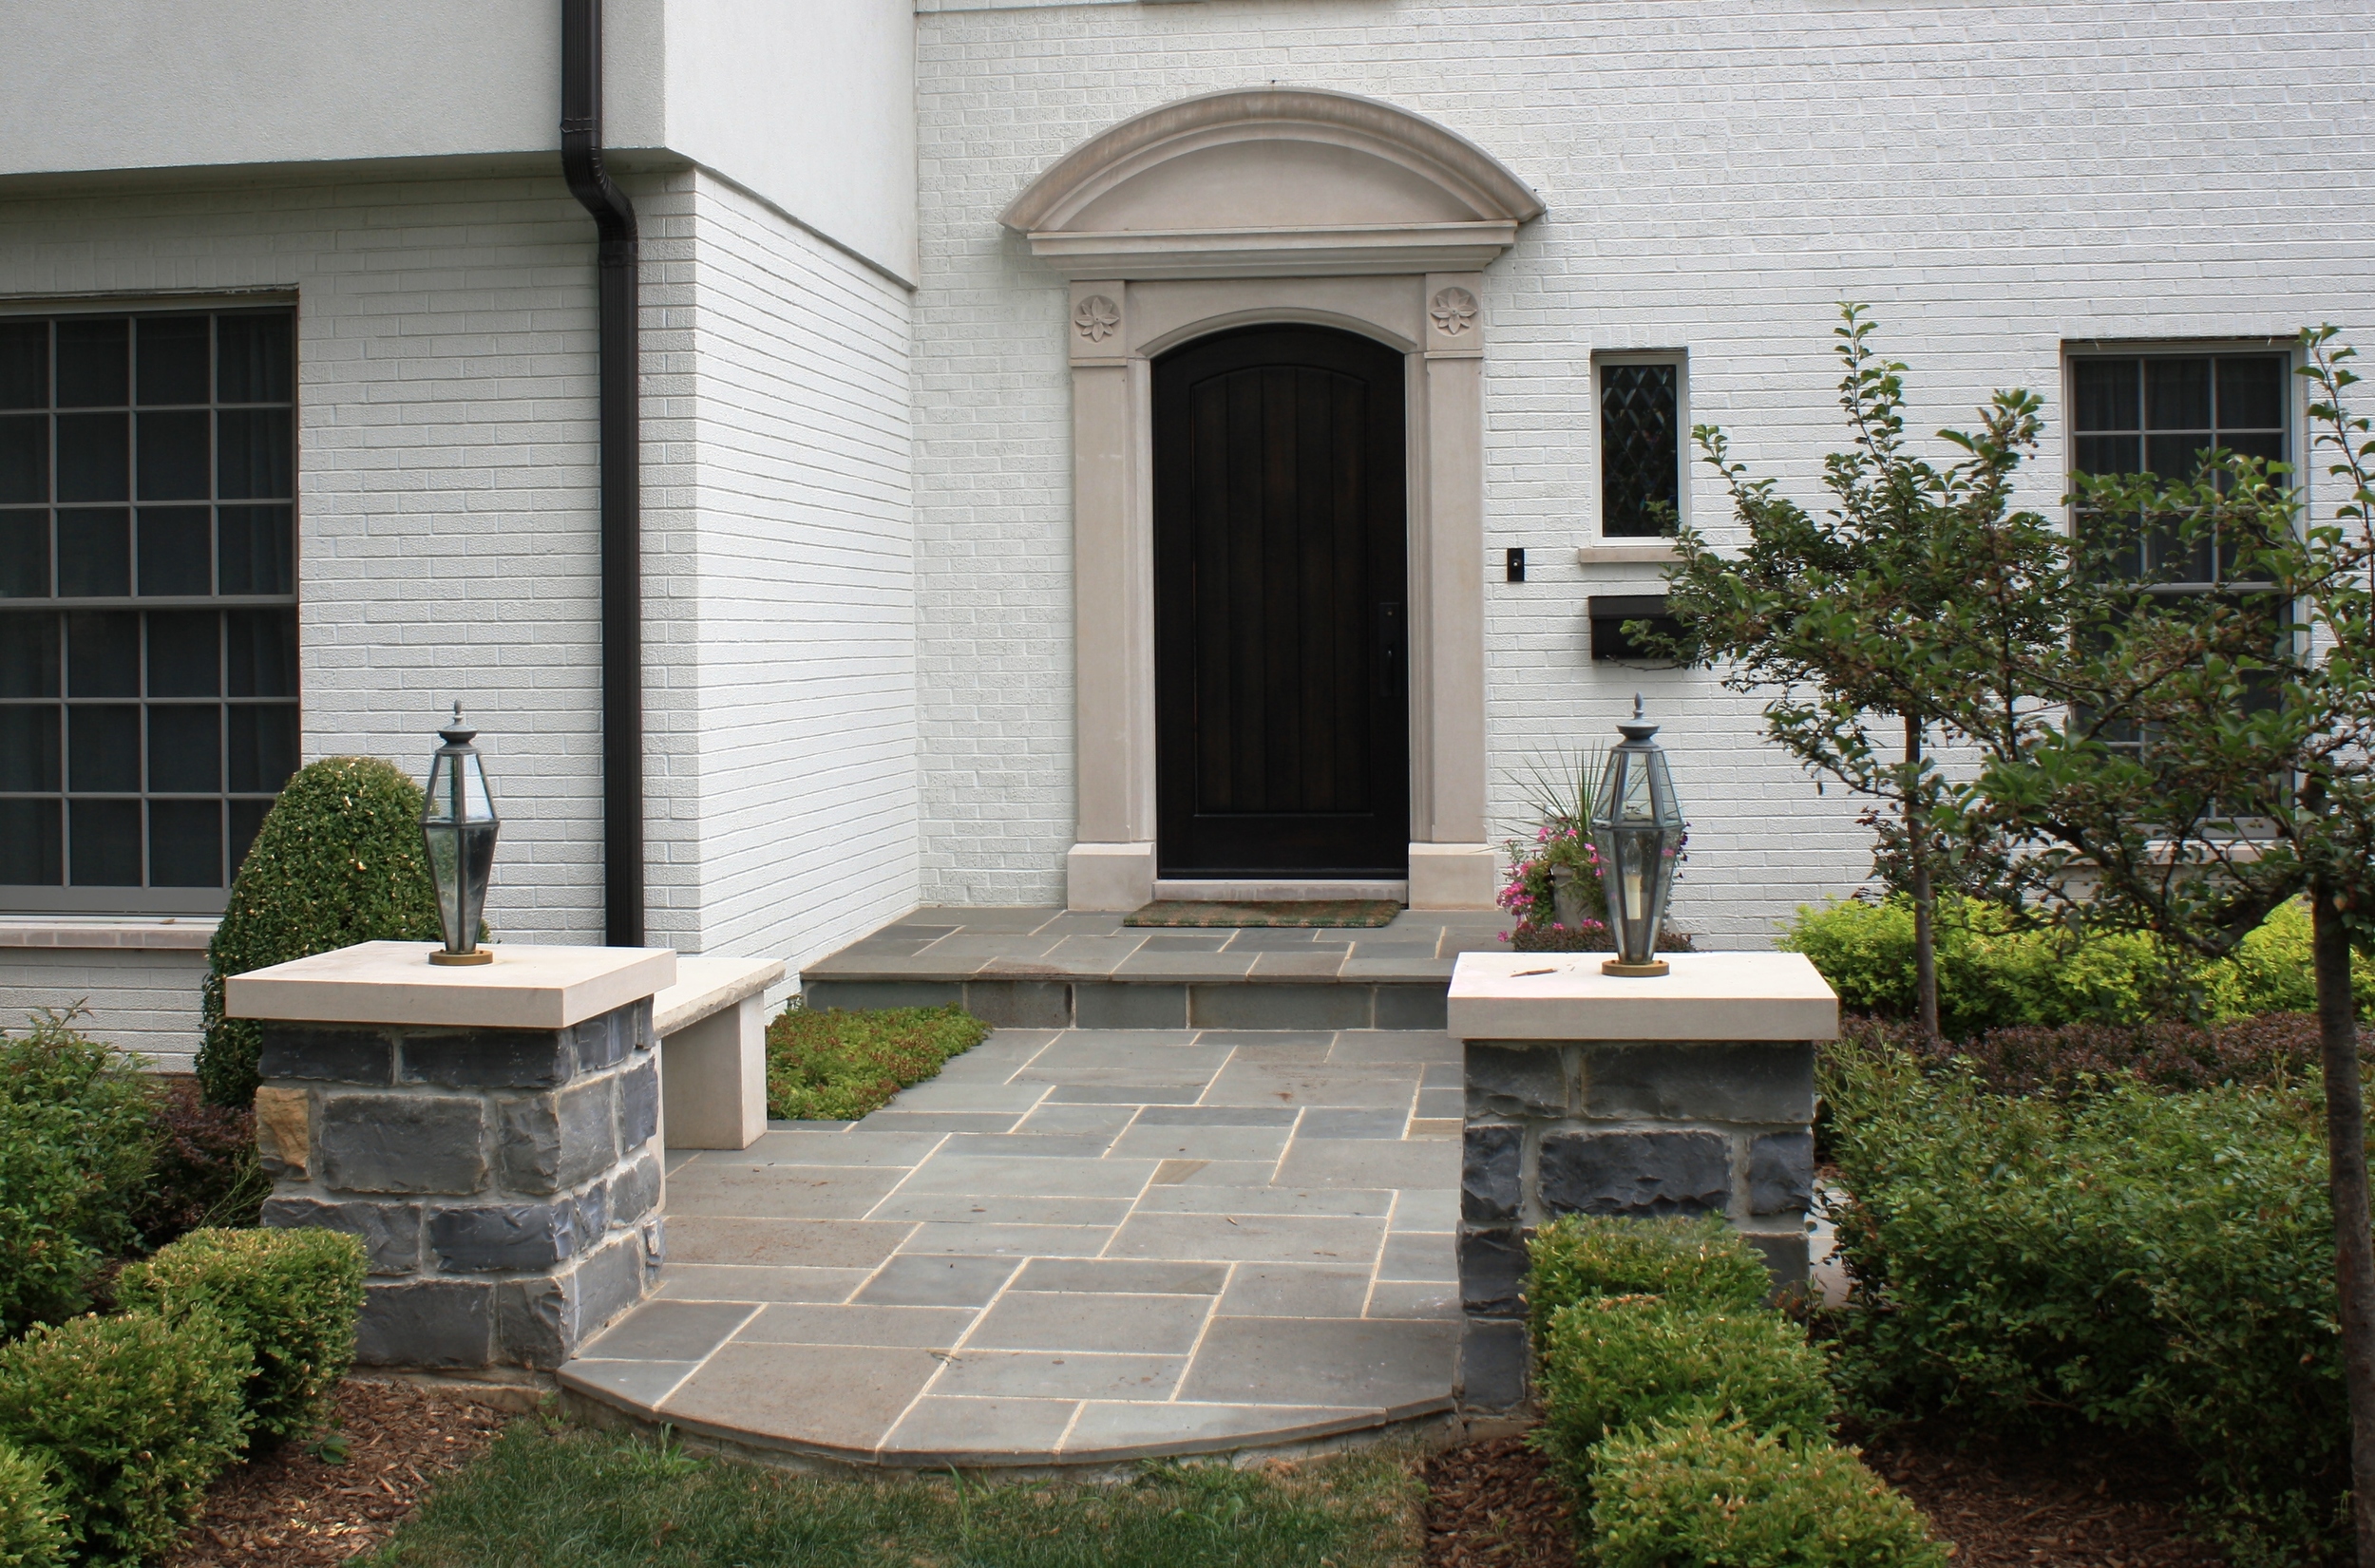  Limestone around the entrance door, bluestone walkway and stone columns. Clarendon Hills, IL 